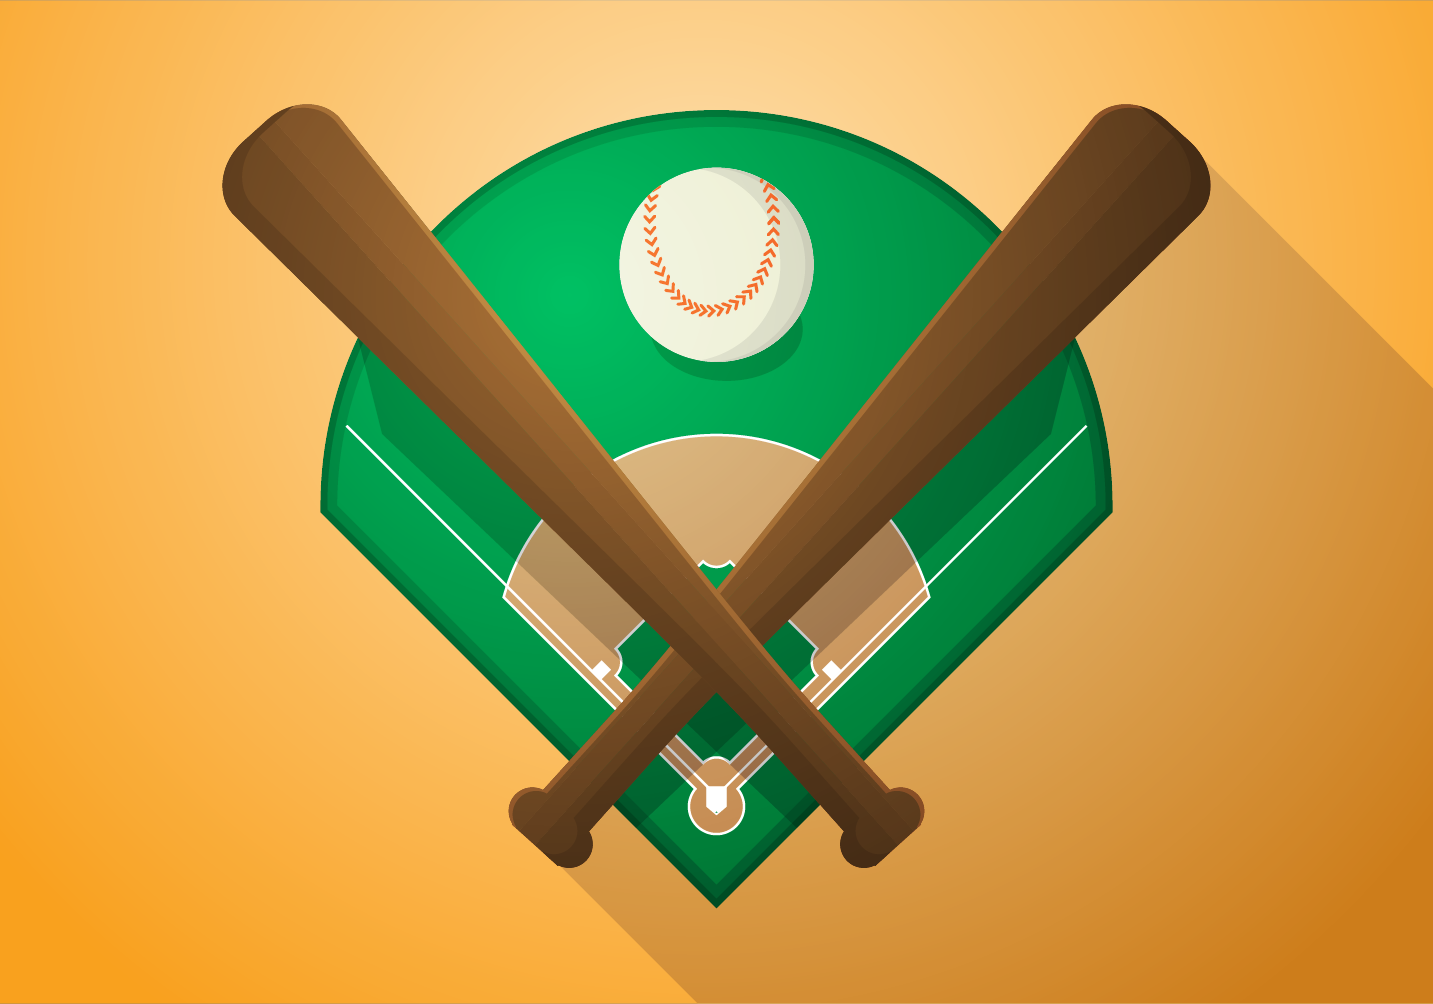 Download Free Vector Illustration of Baseball Diamond for free.